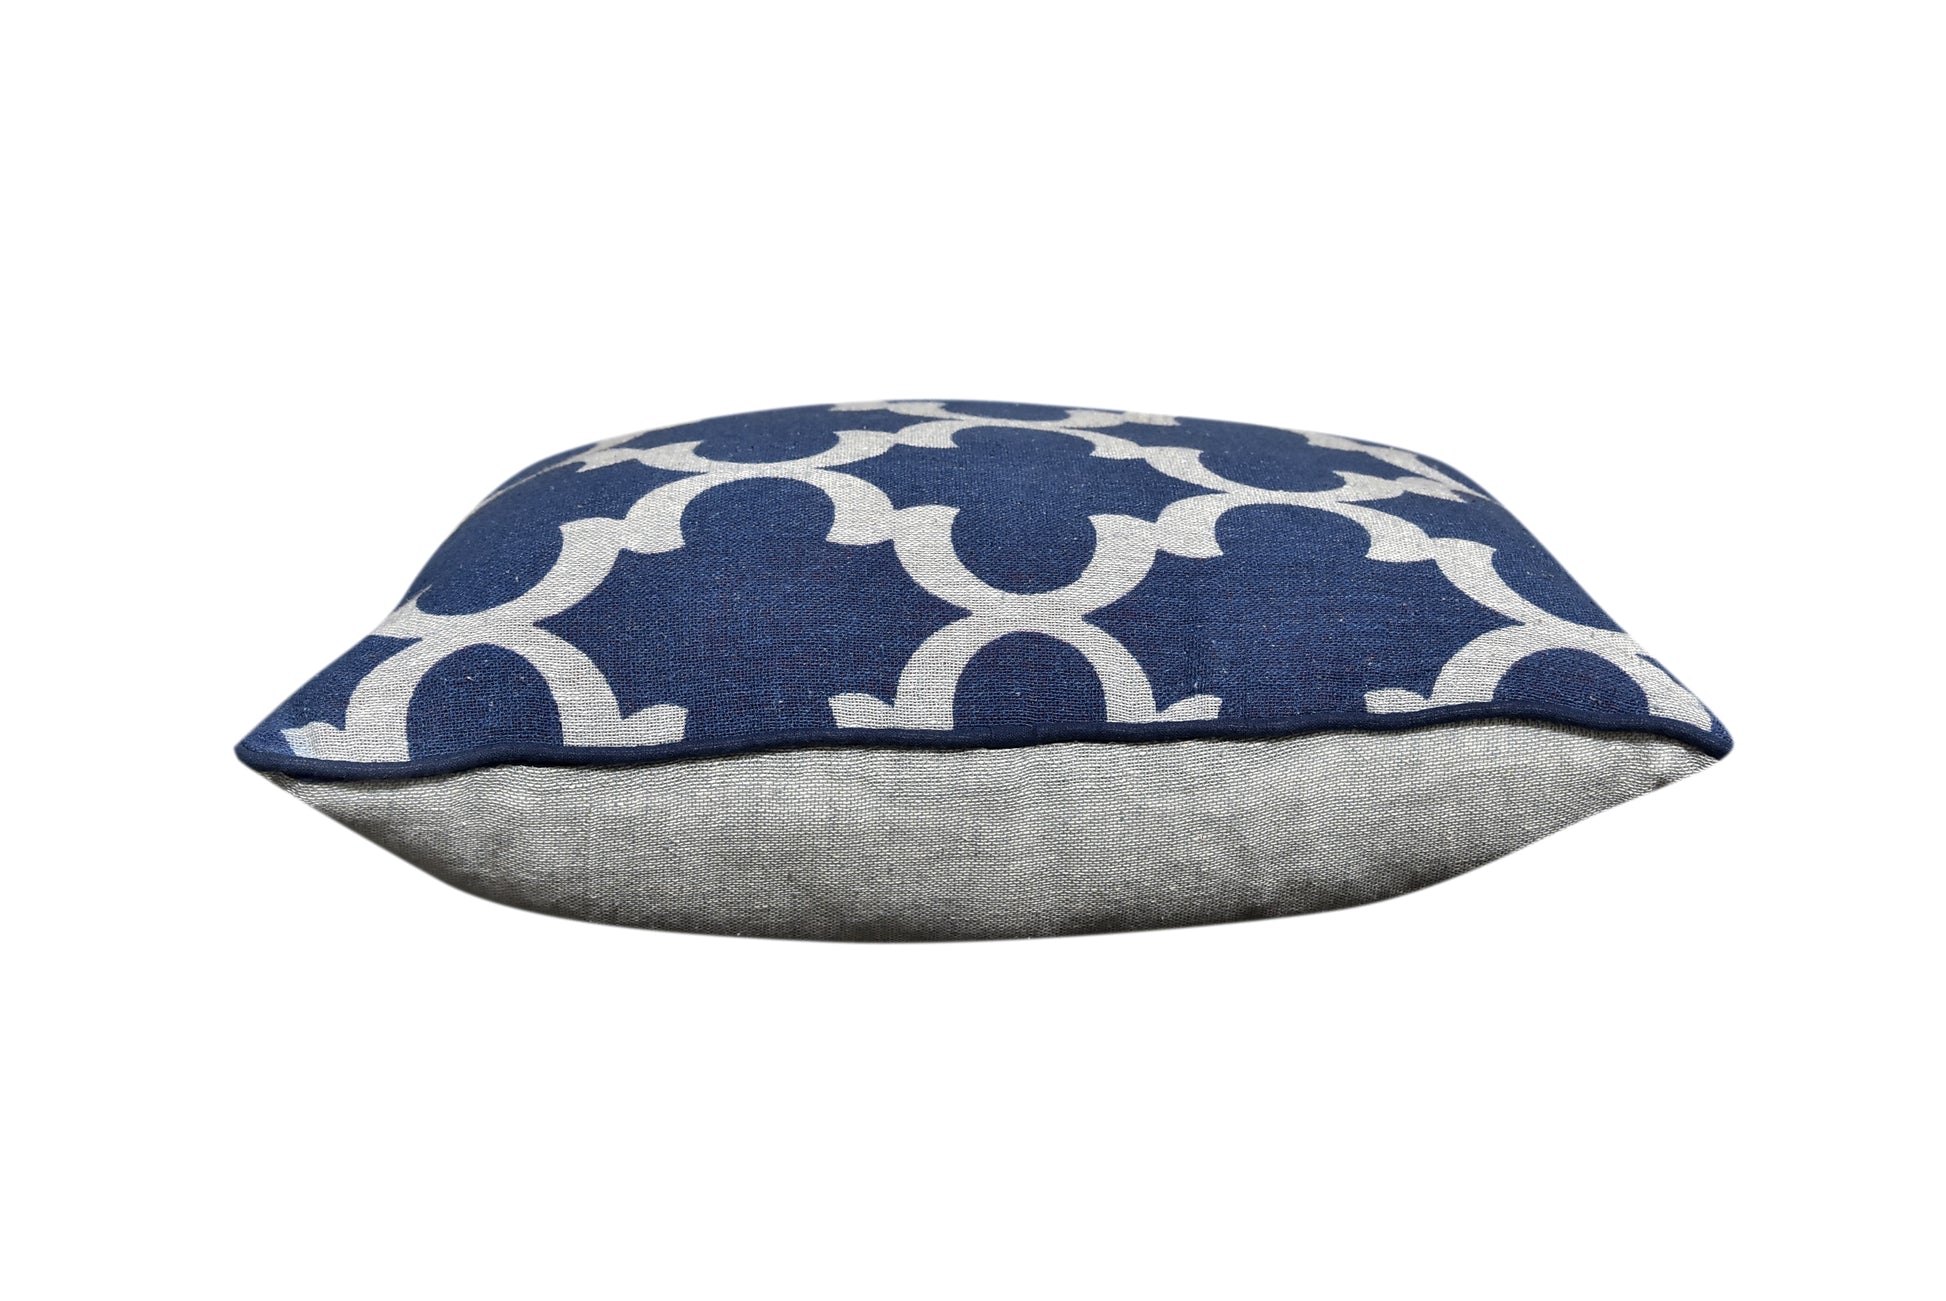 Neelofar's Indigo geometric cushion cover